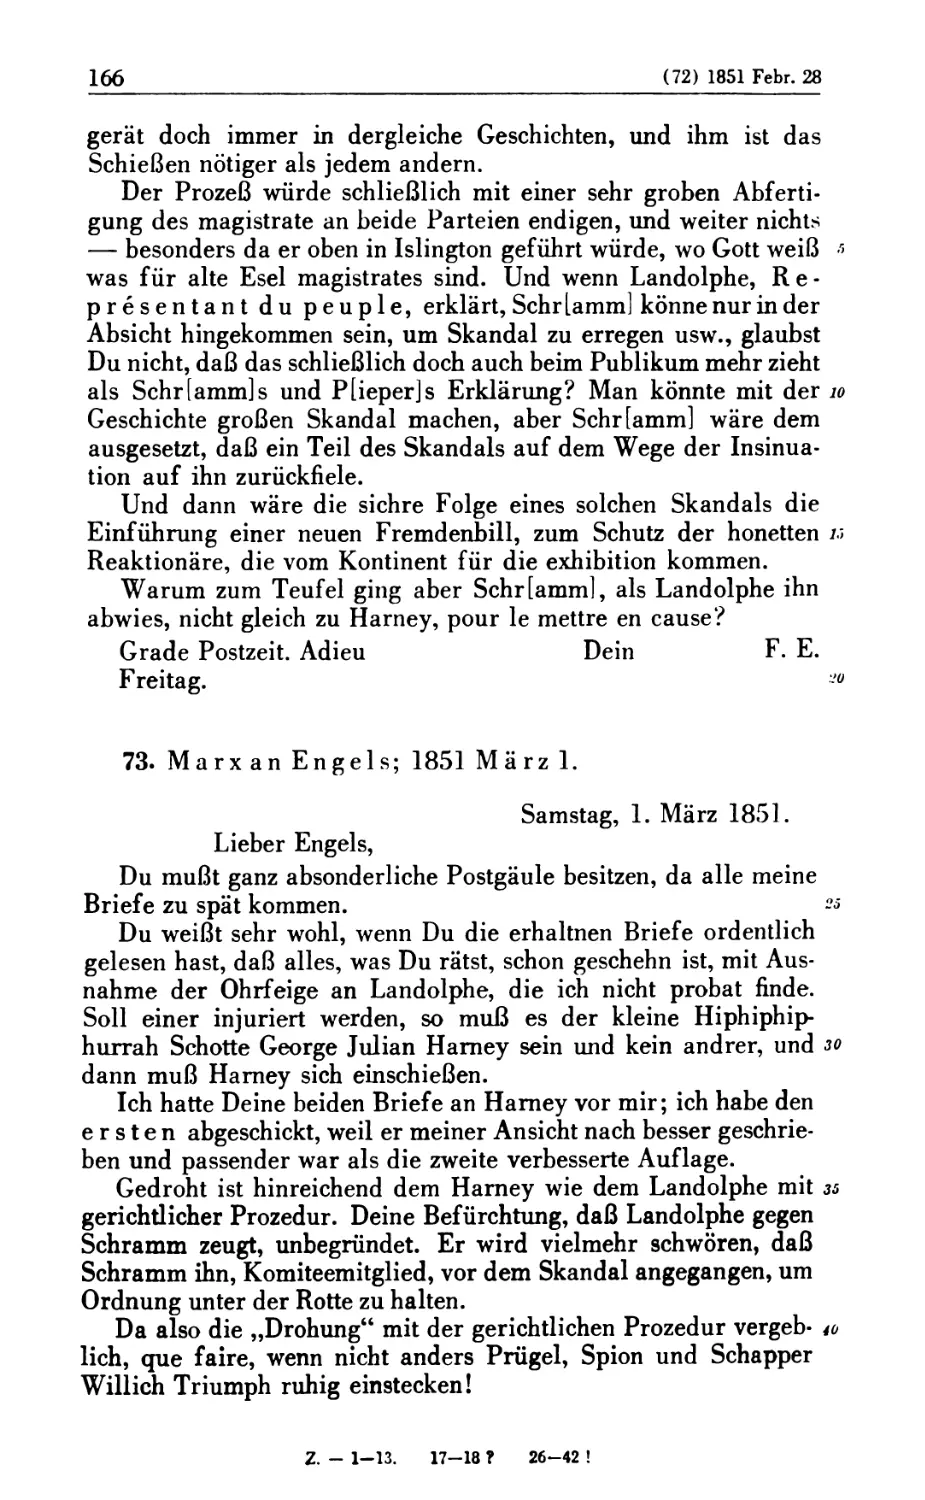 73. Marx an Engels; 1851 März 1